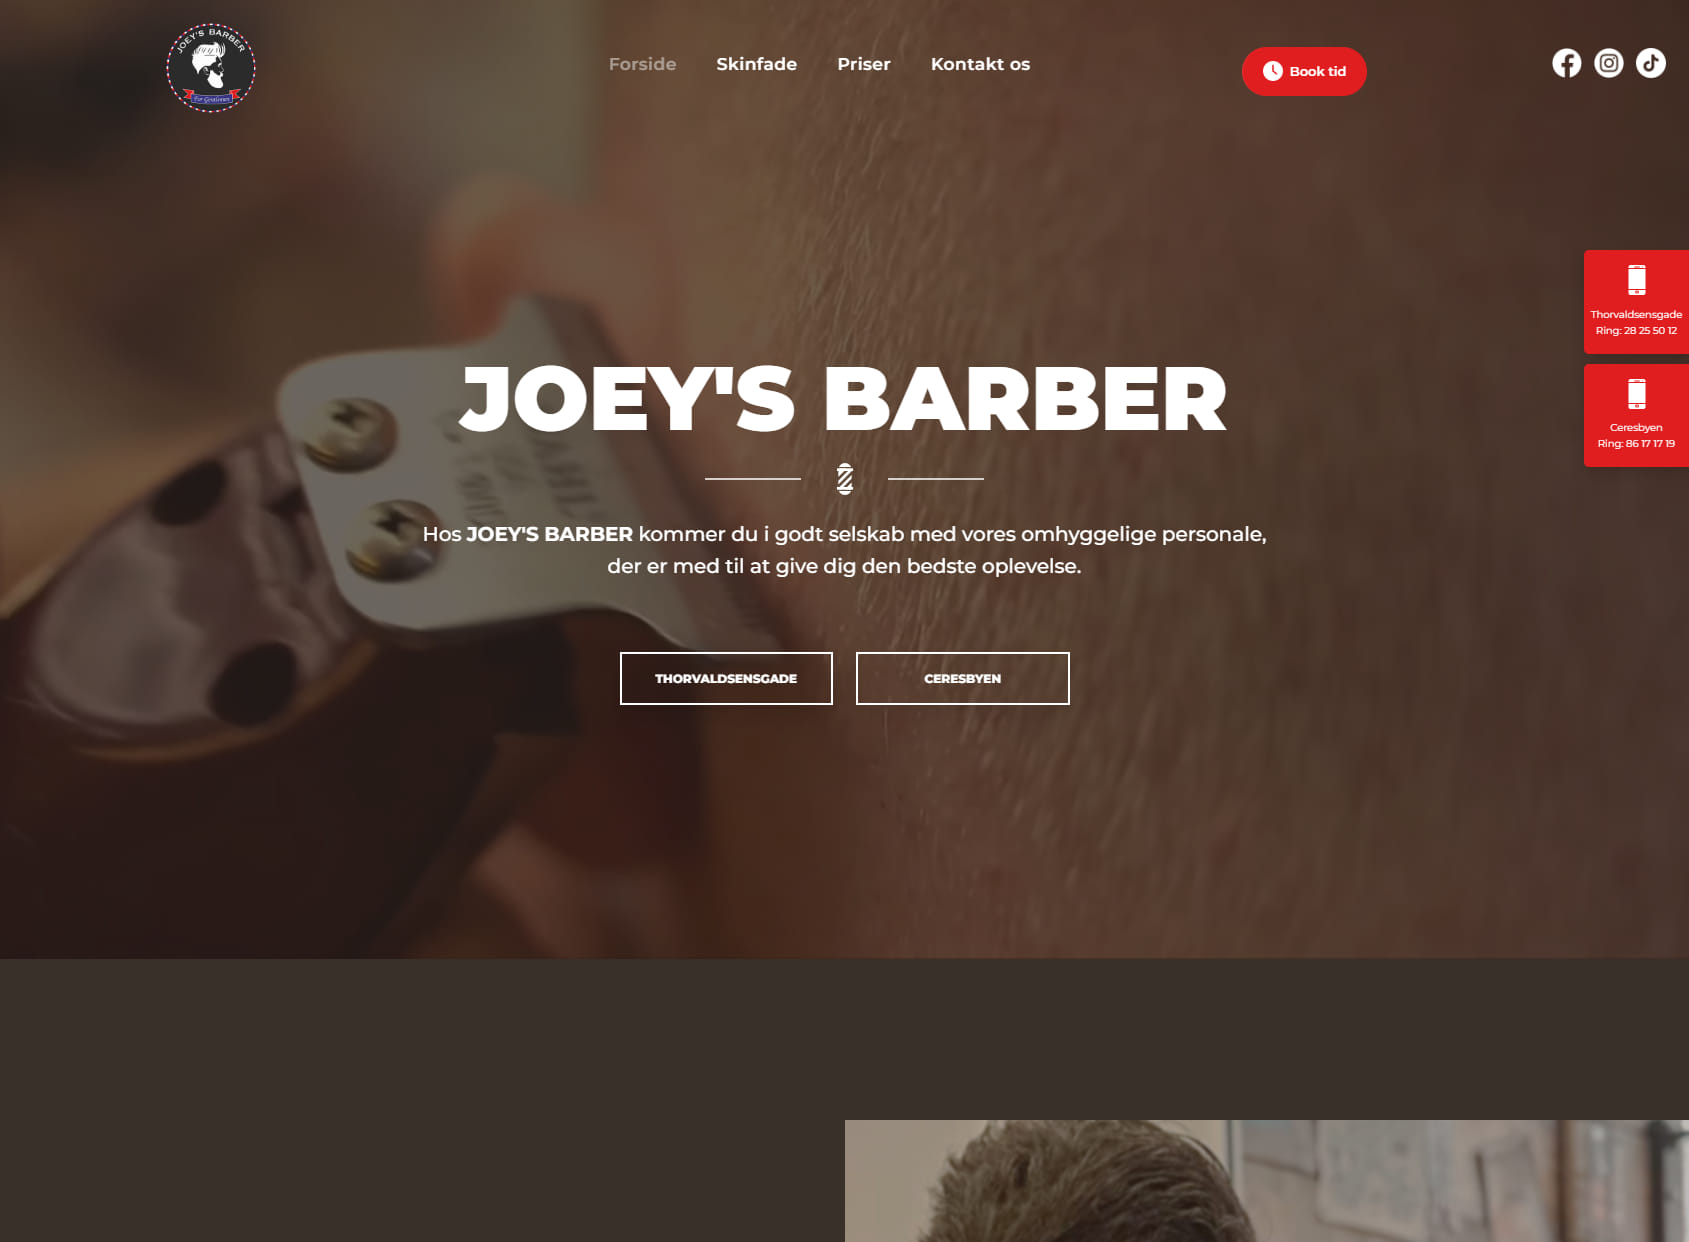 Joey's Barber